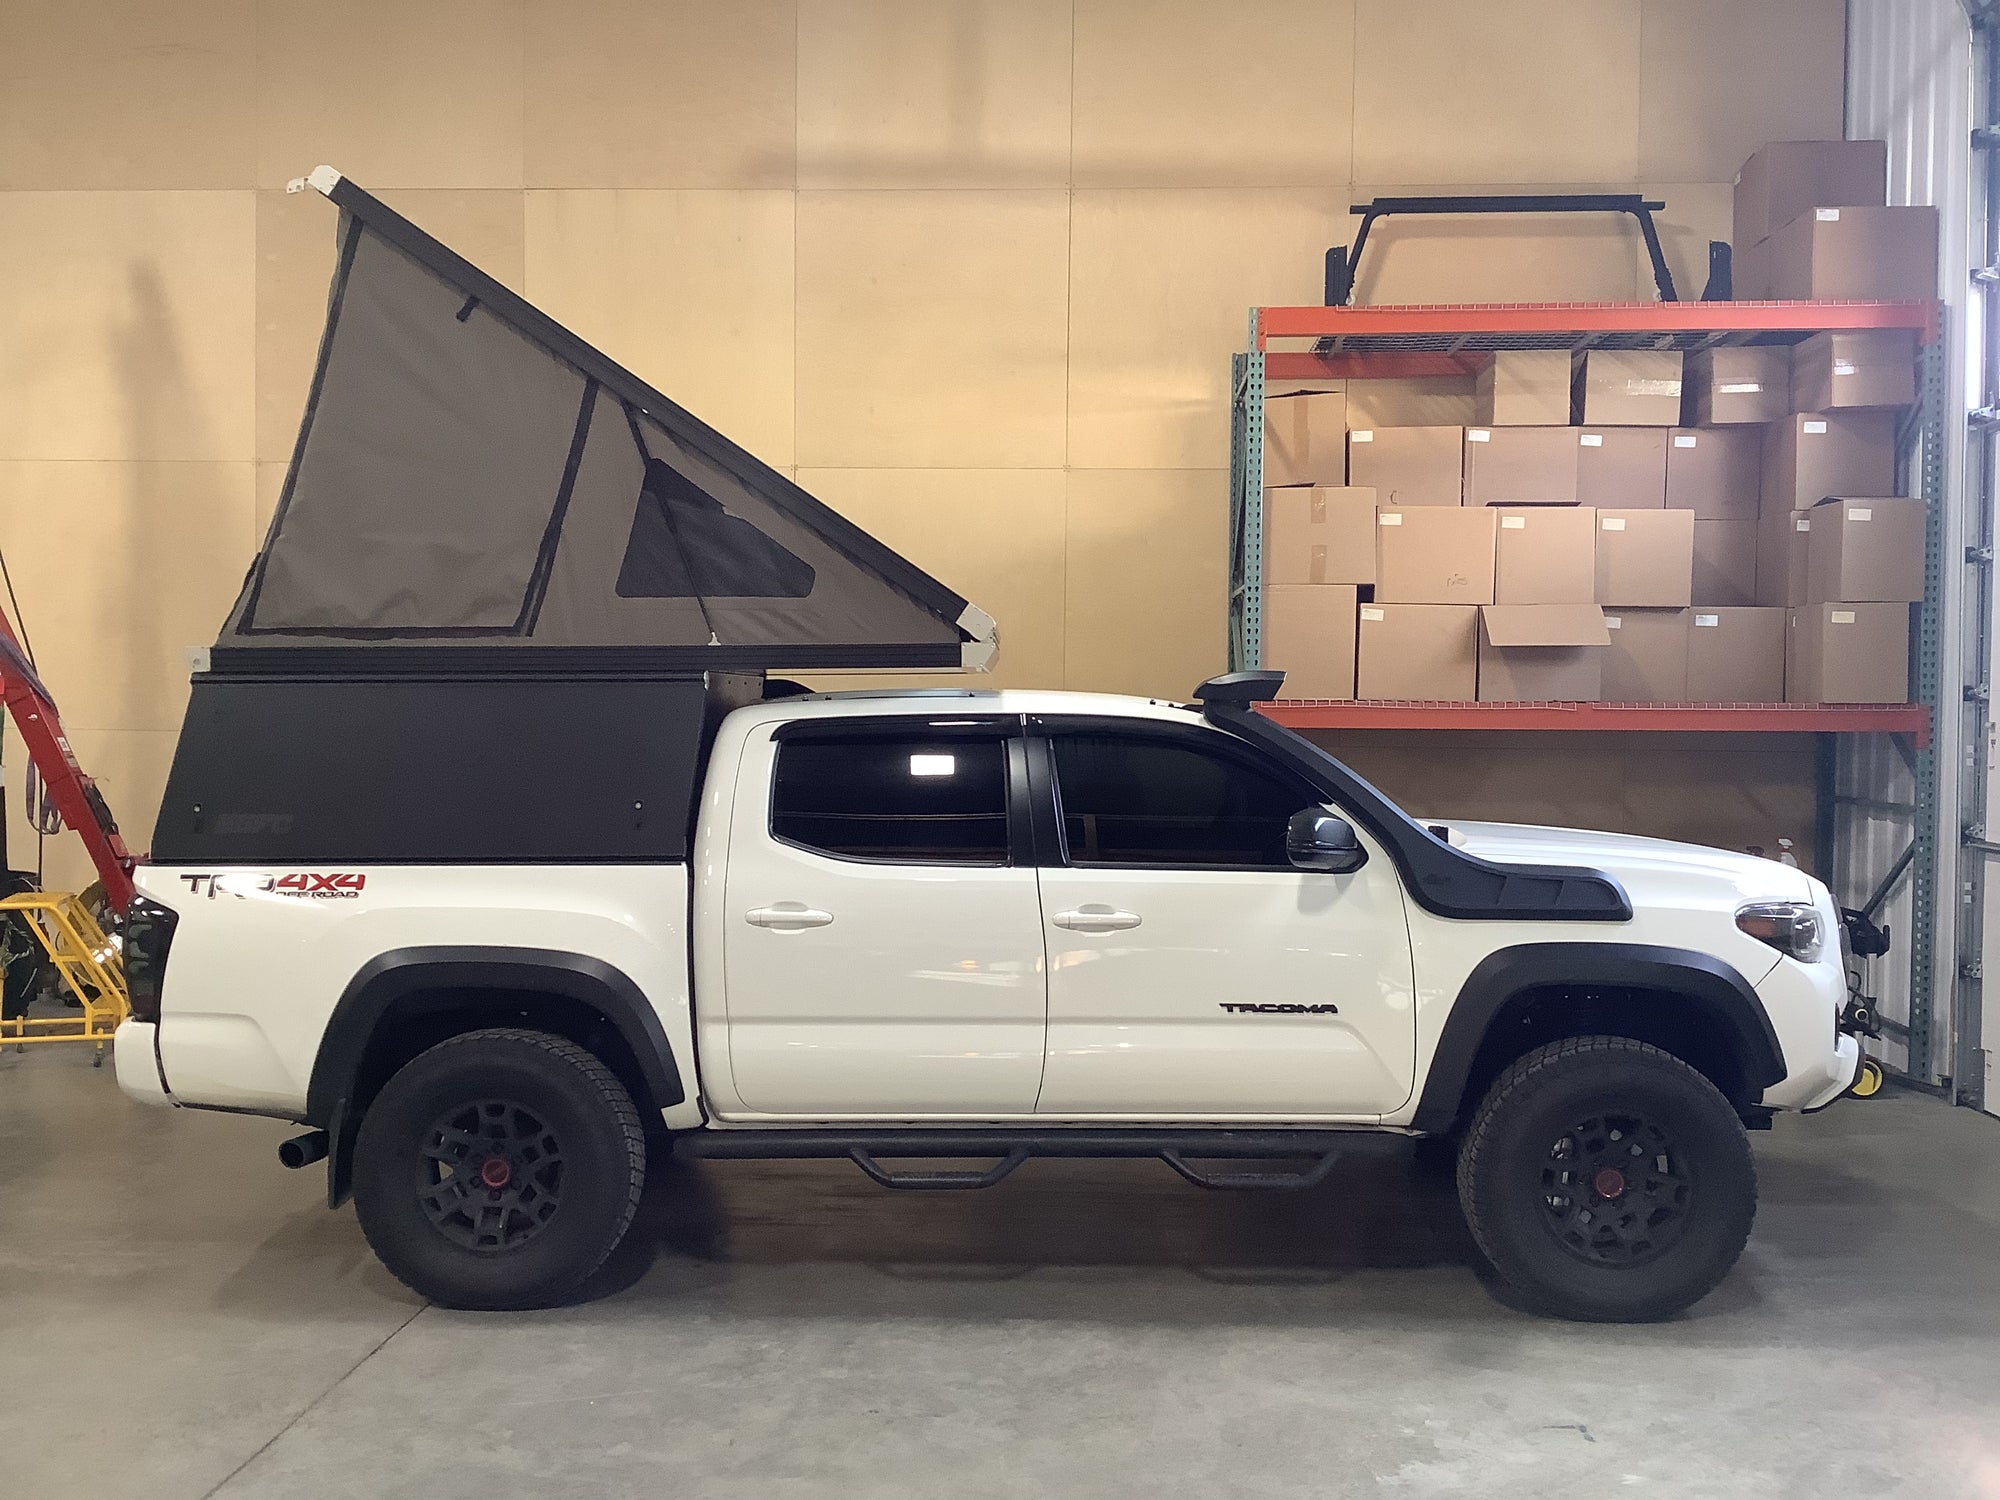 2021 Toyota Tacoma Camper - Build #4155